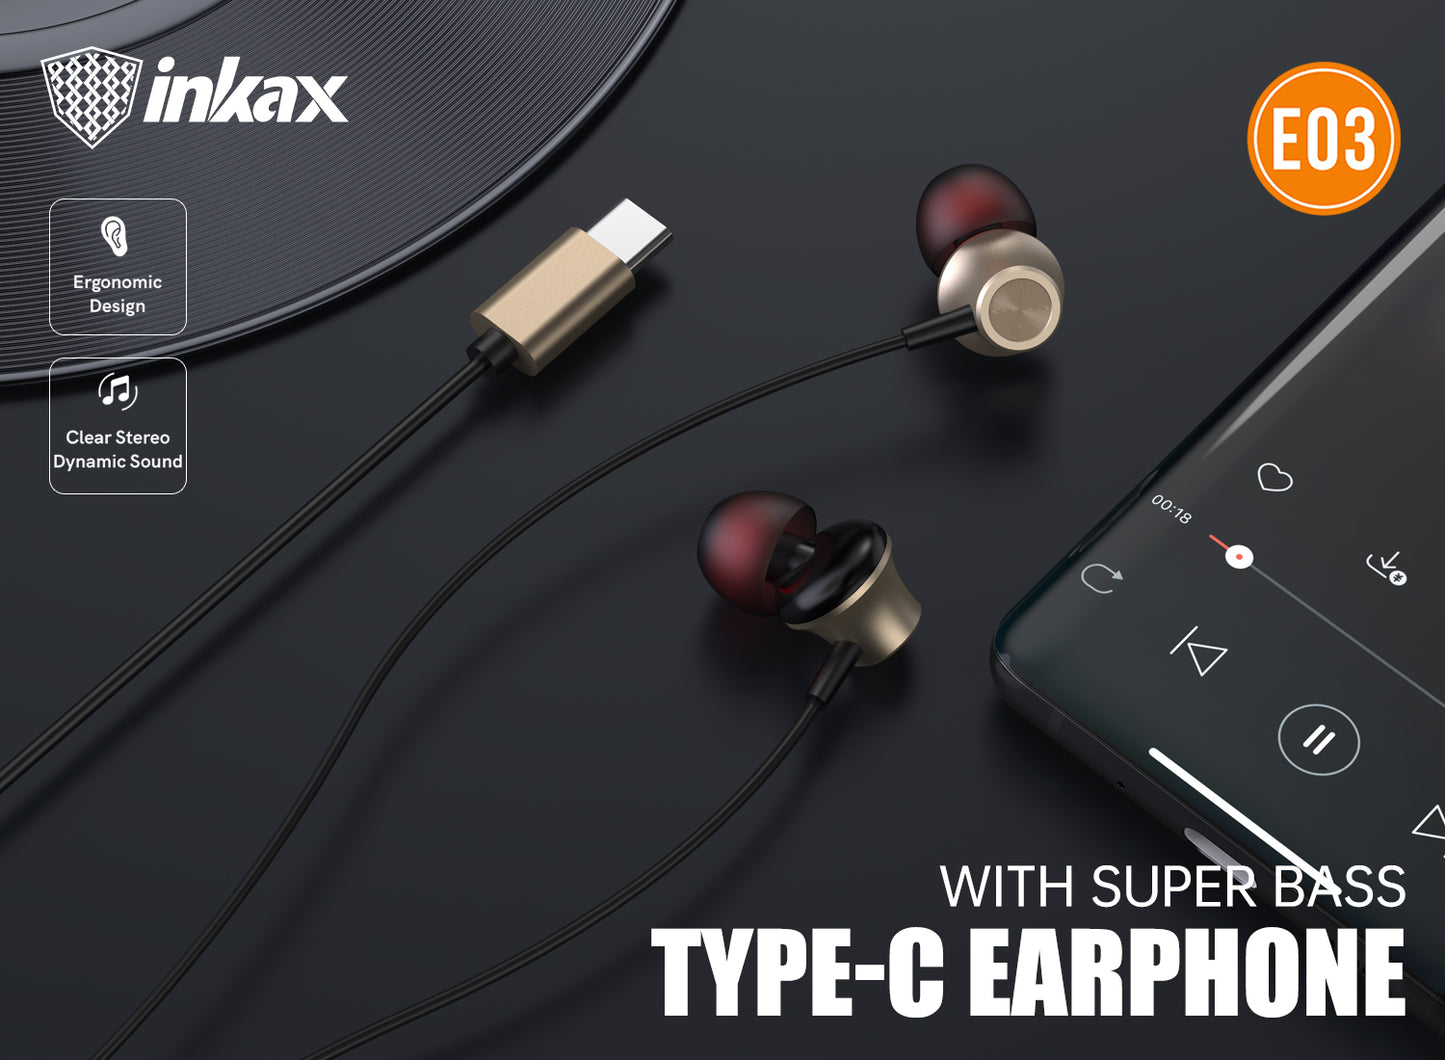 Inkax E03 1.2M Super Bass Type-c Earphone